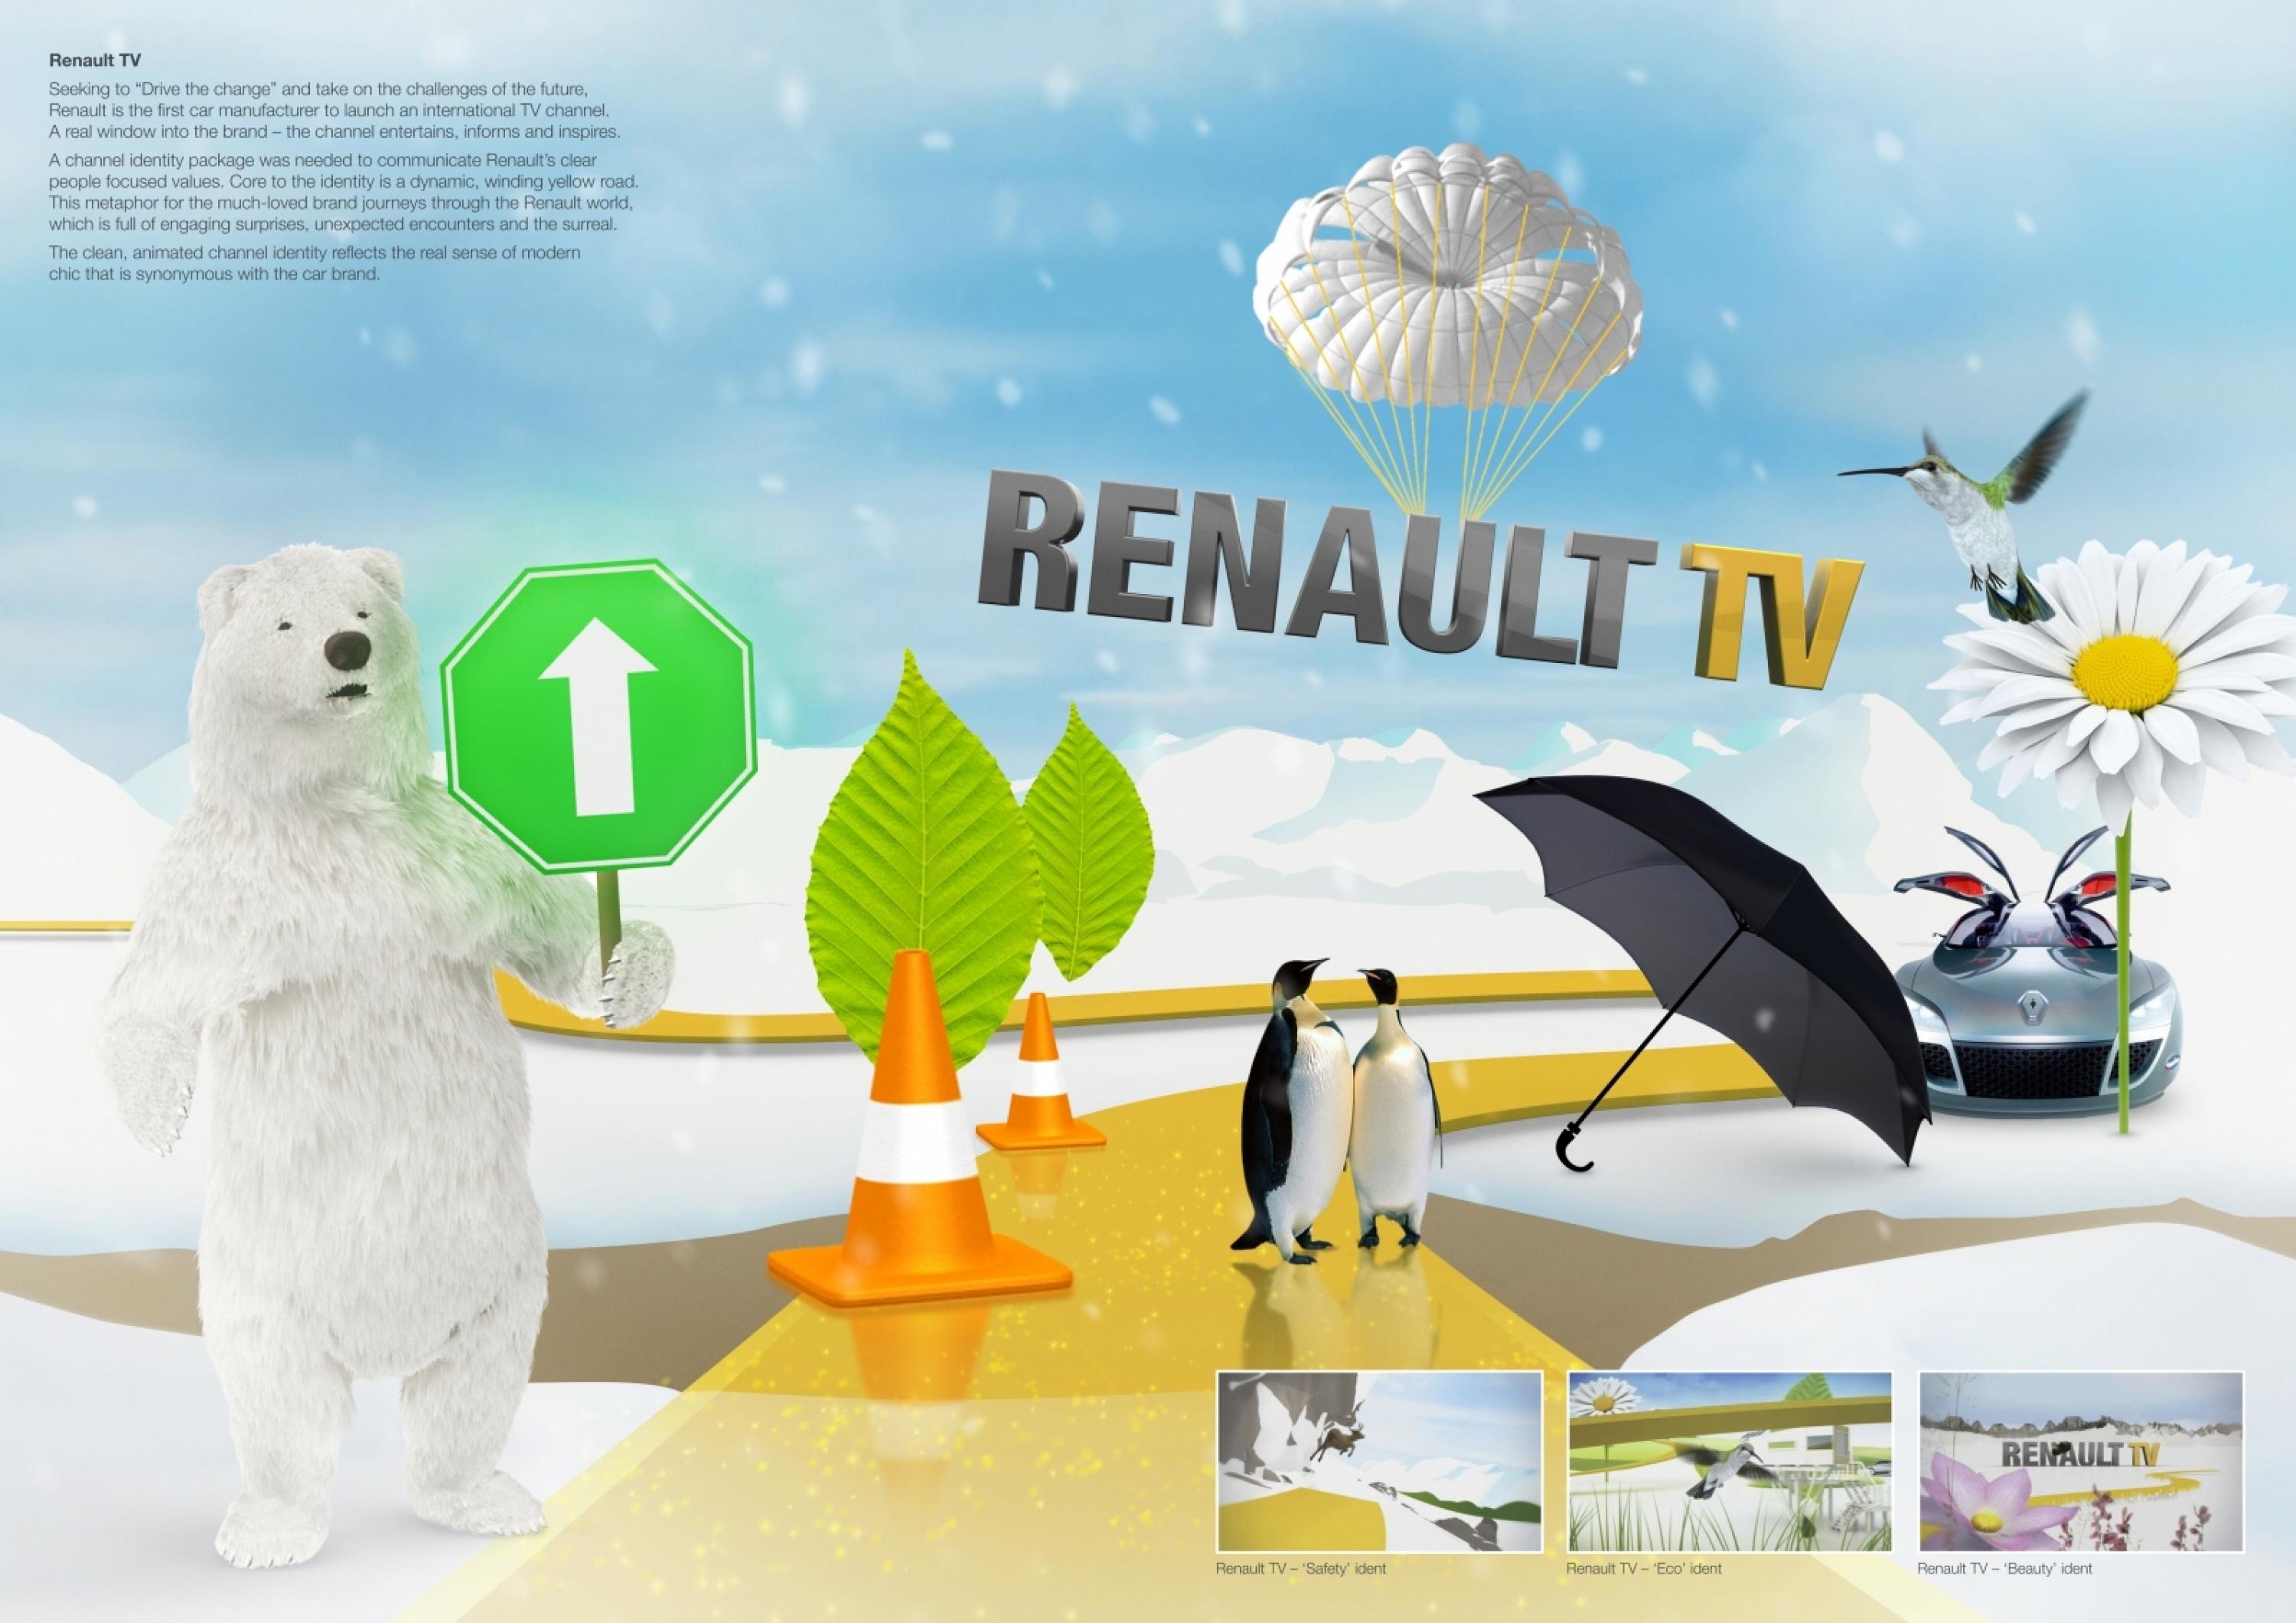 RENAULT TV